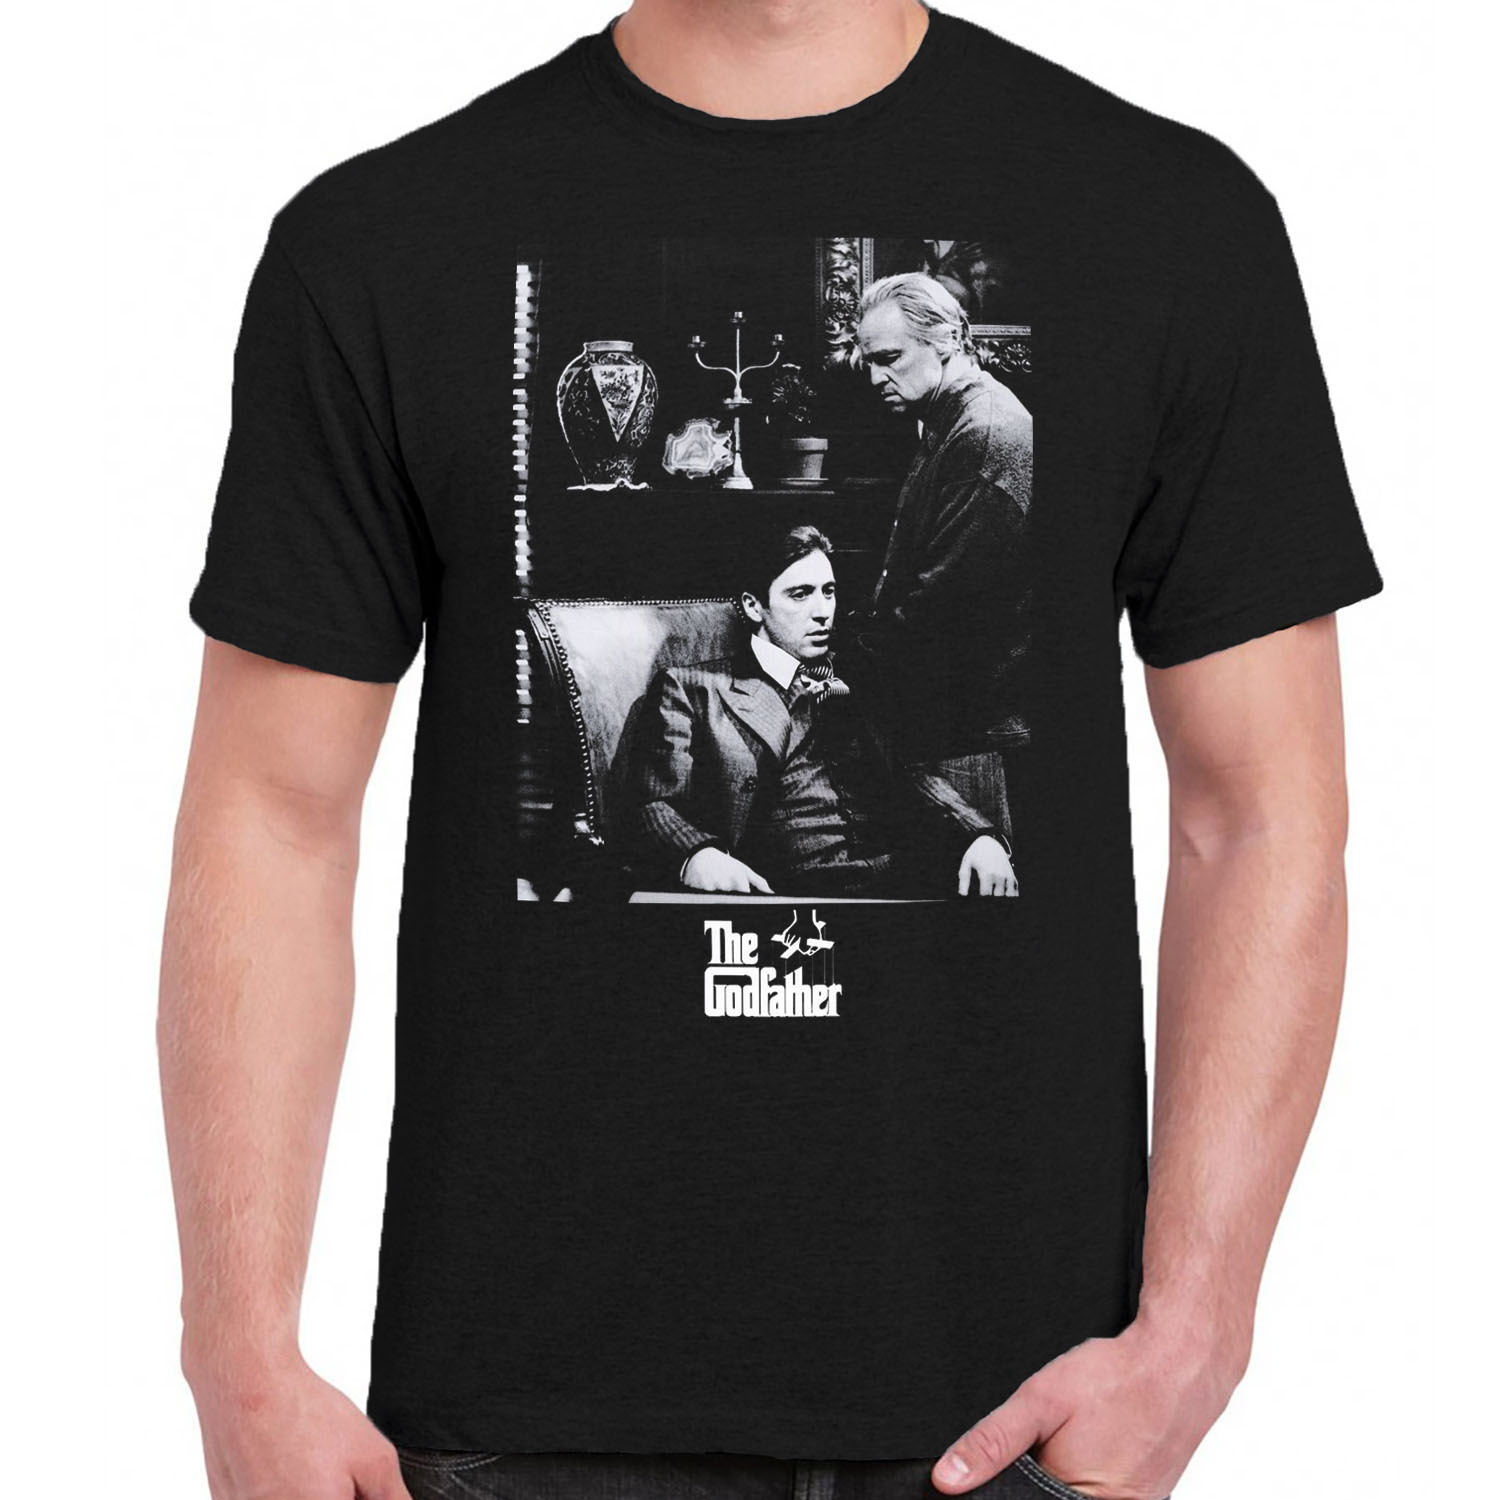 personalized mens shirt, The Godfather shirt, personalized DARK t-shirt